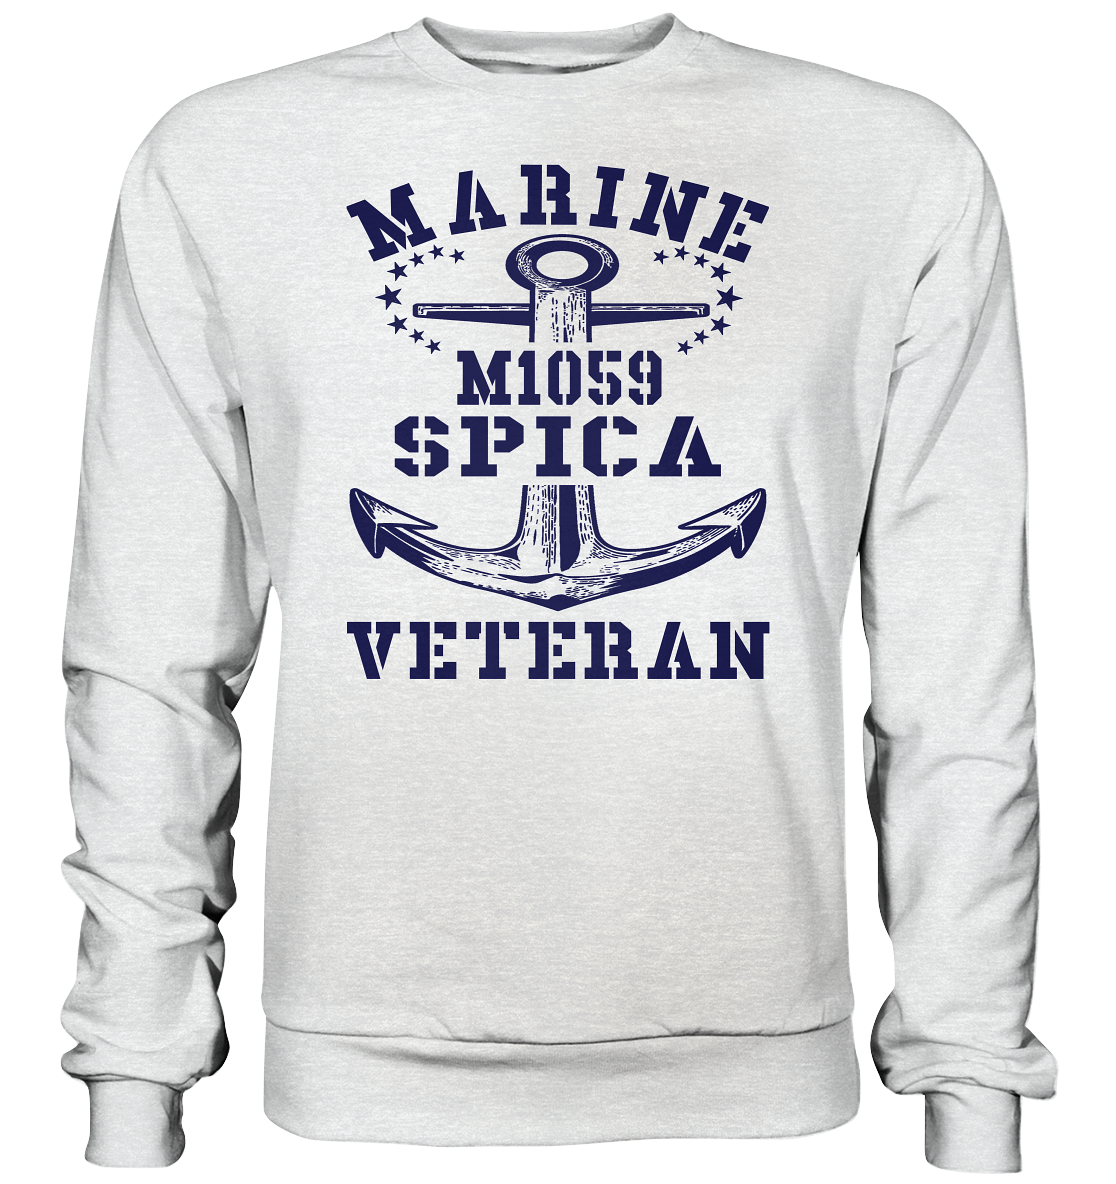 SM-Boot M1059 SPICA Marine Veteran - Premium Sweatshirt